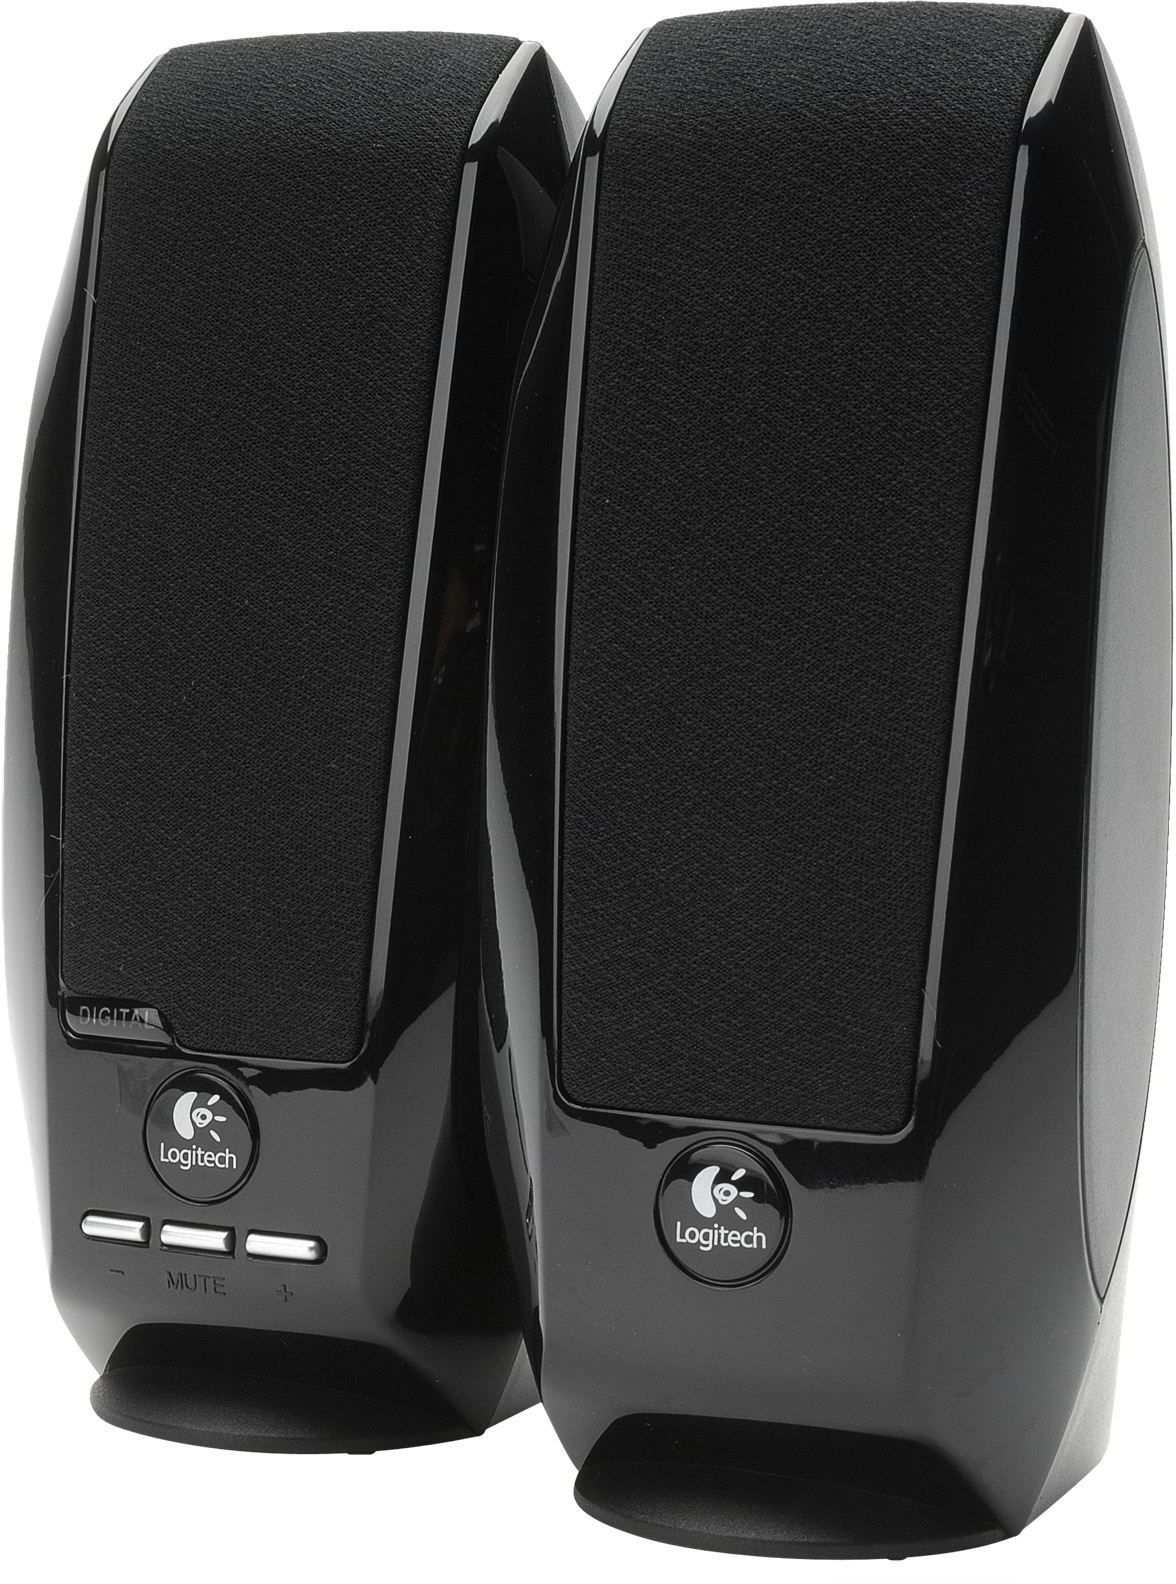 Logitech S150 1.2 Watt 2.0 Digital Speakers - Black - image 1 of 2